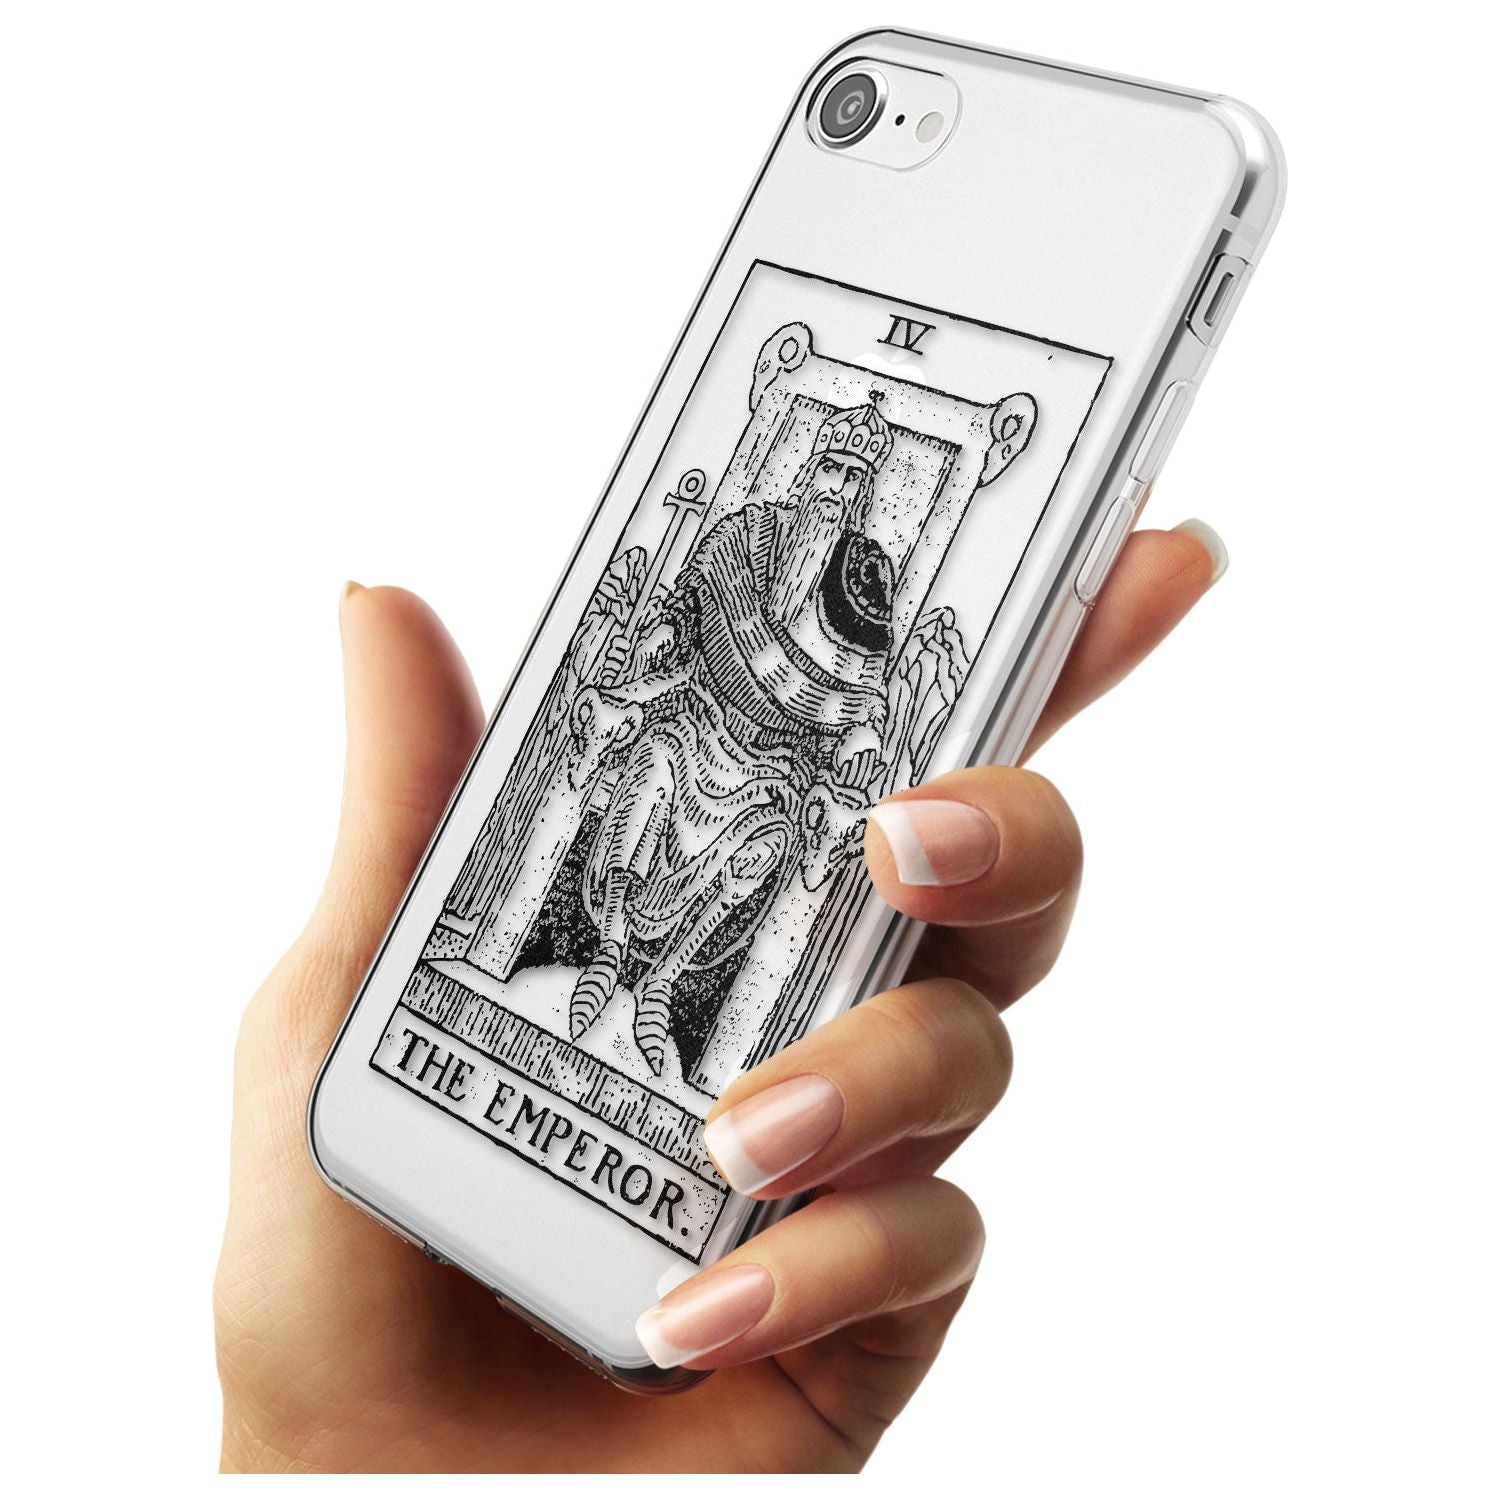 The Emperor Tarot Card - Transparent Black Impact Phone Case for iPhone SE 8 7 Plus